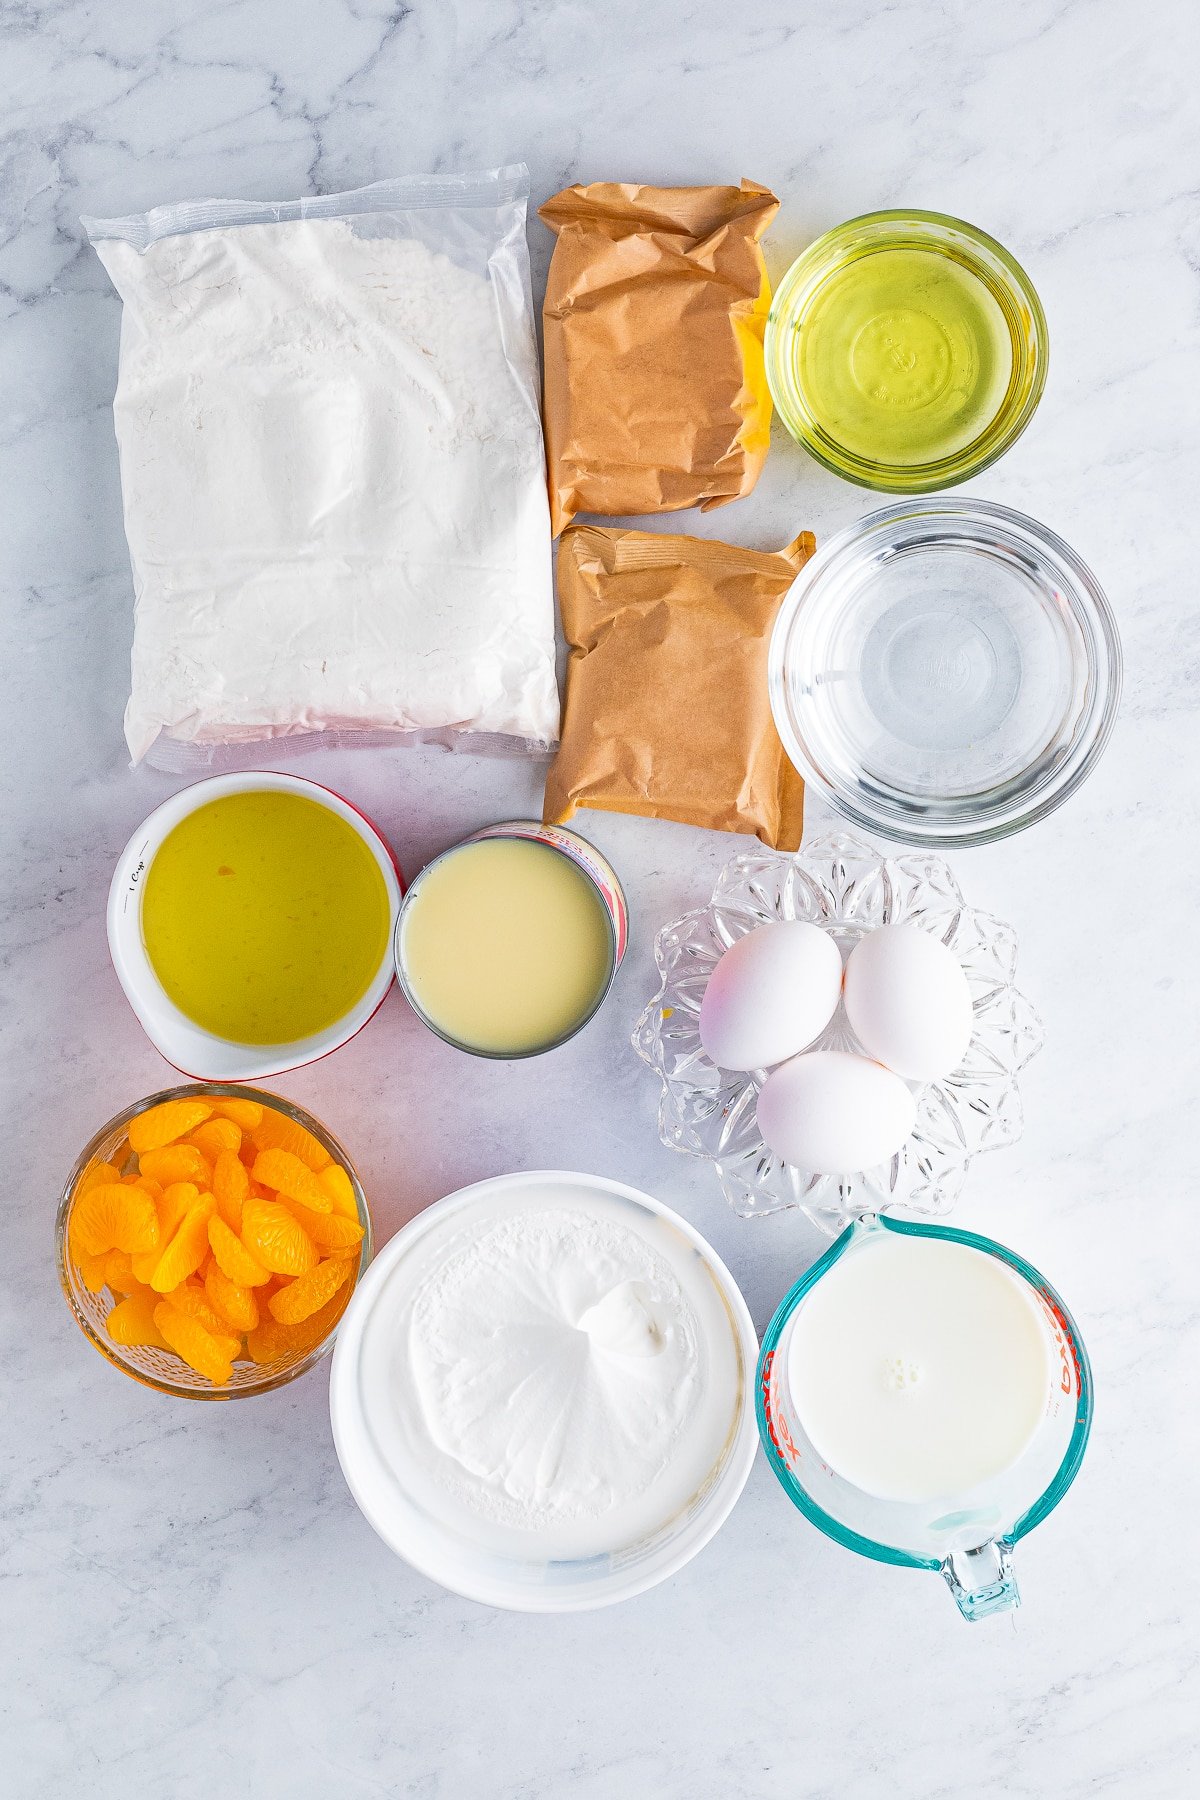 ingredients needed to make Orange Creamsicle Cake